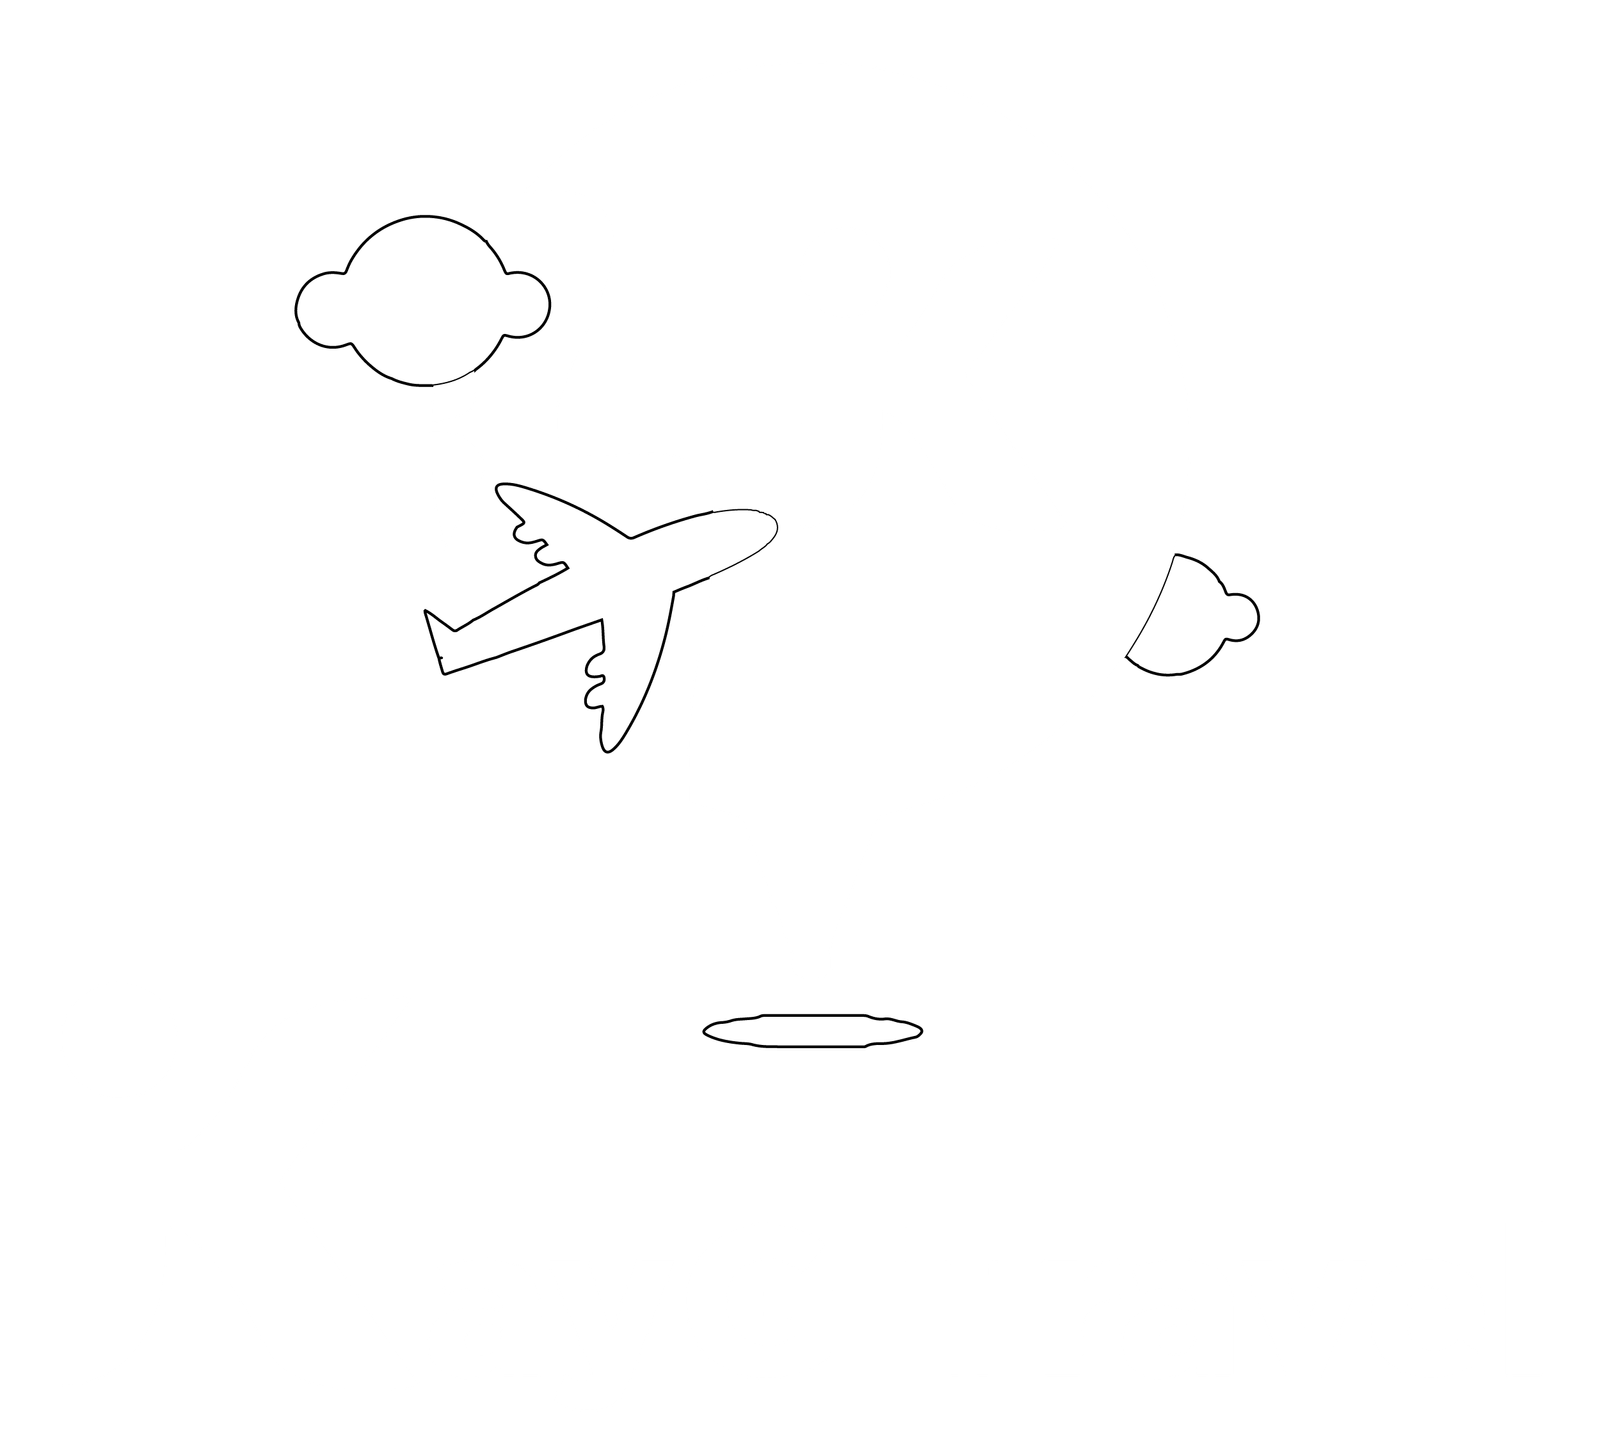 KaygTravel